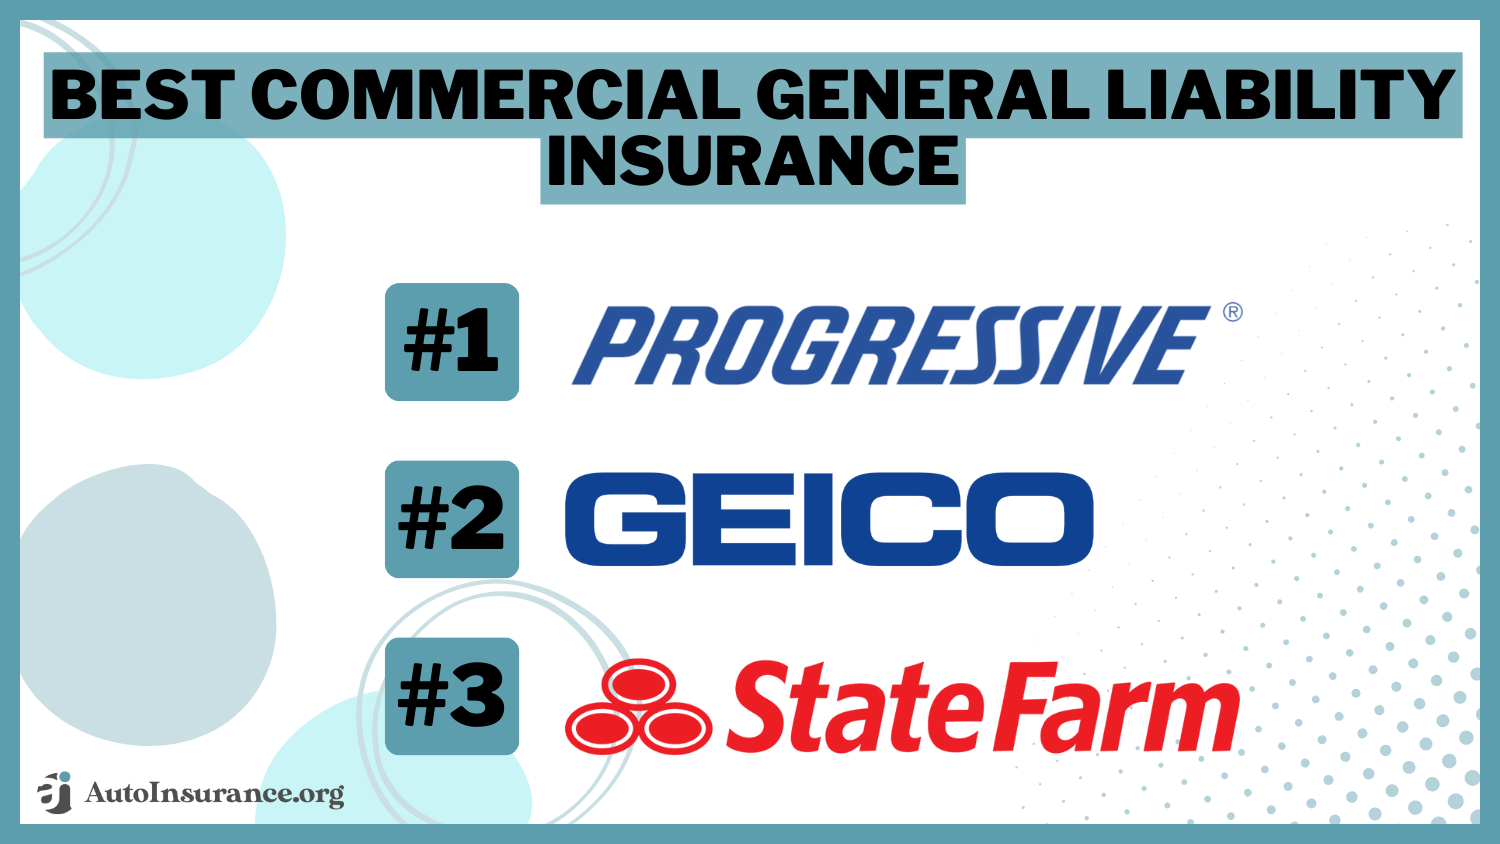 Best Commercial General Liability Insurance: Progressive, Geico, State Farm